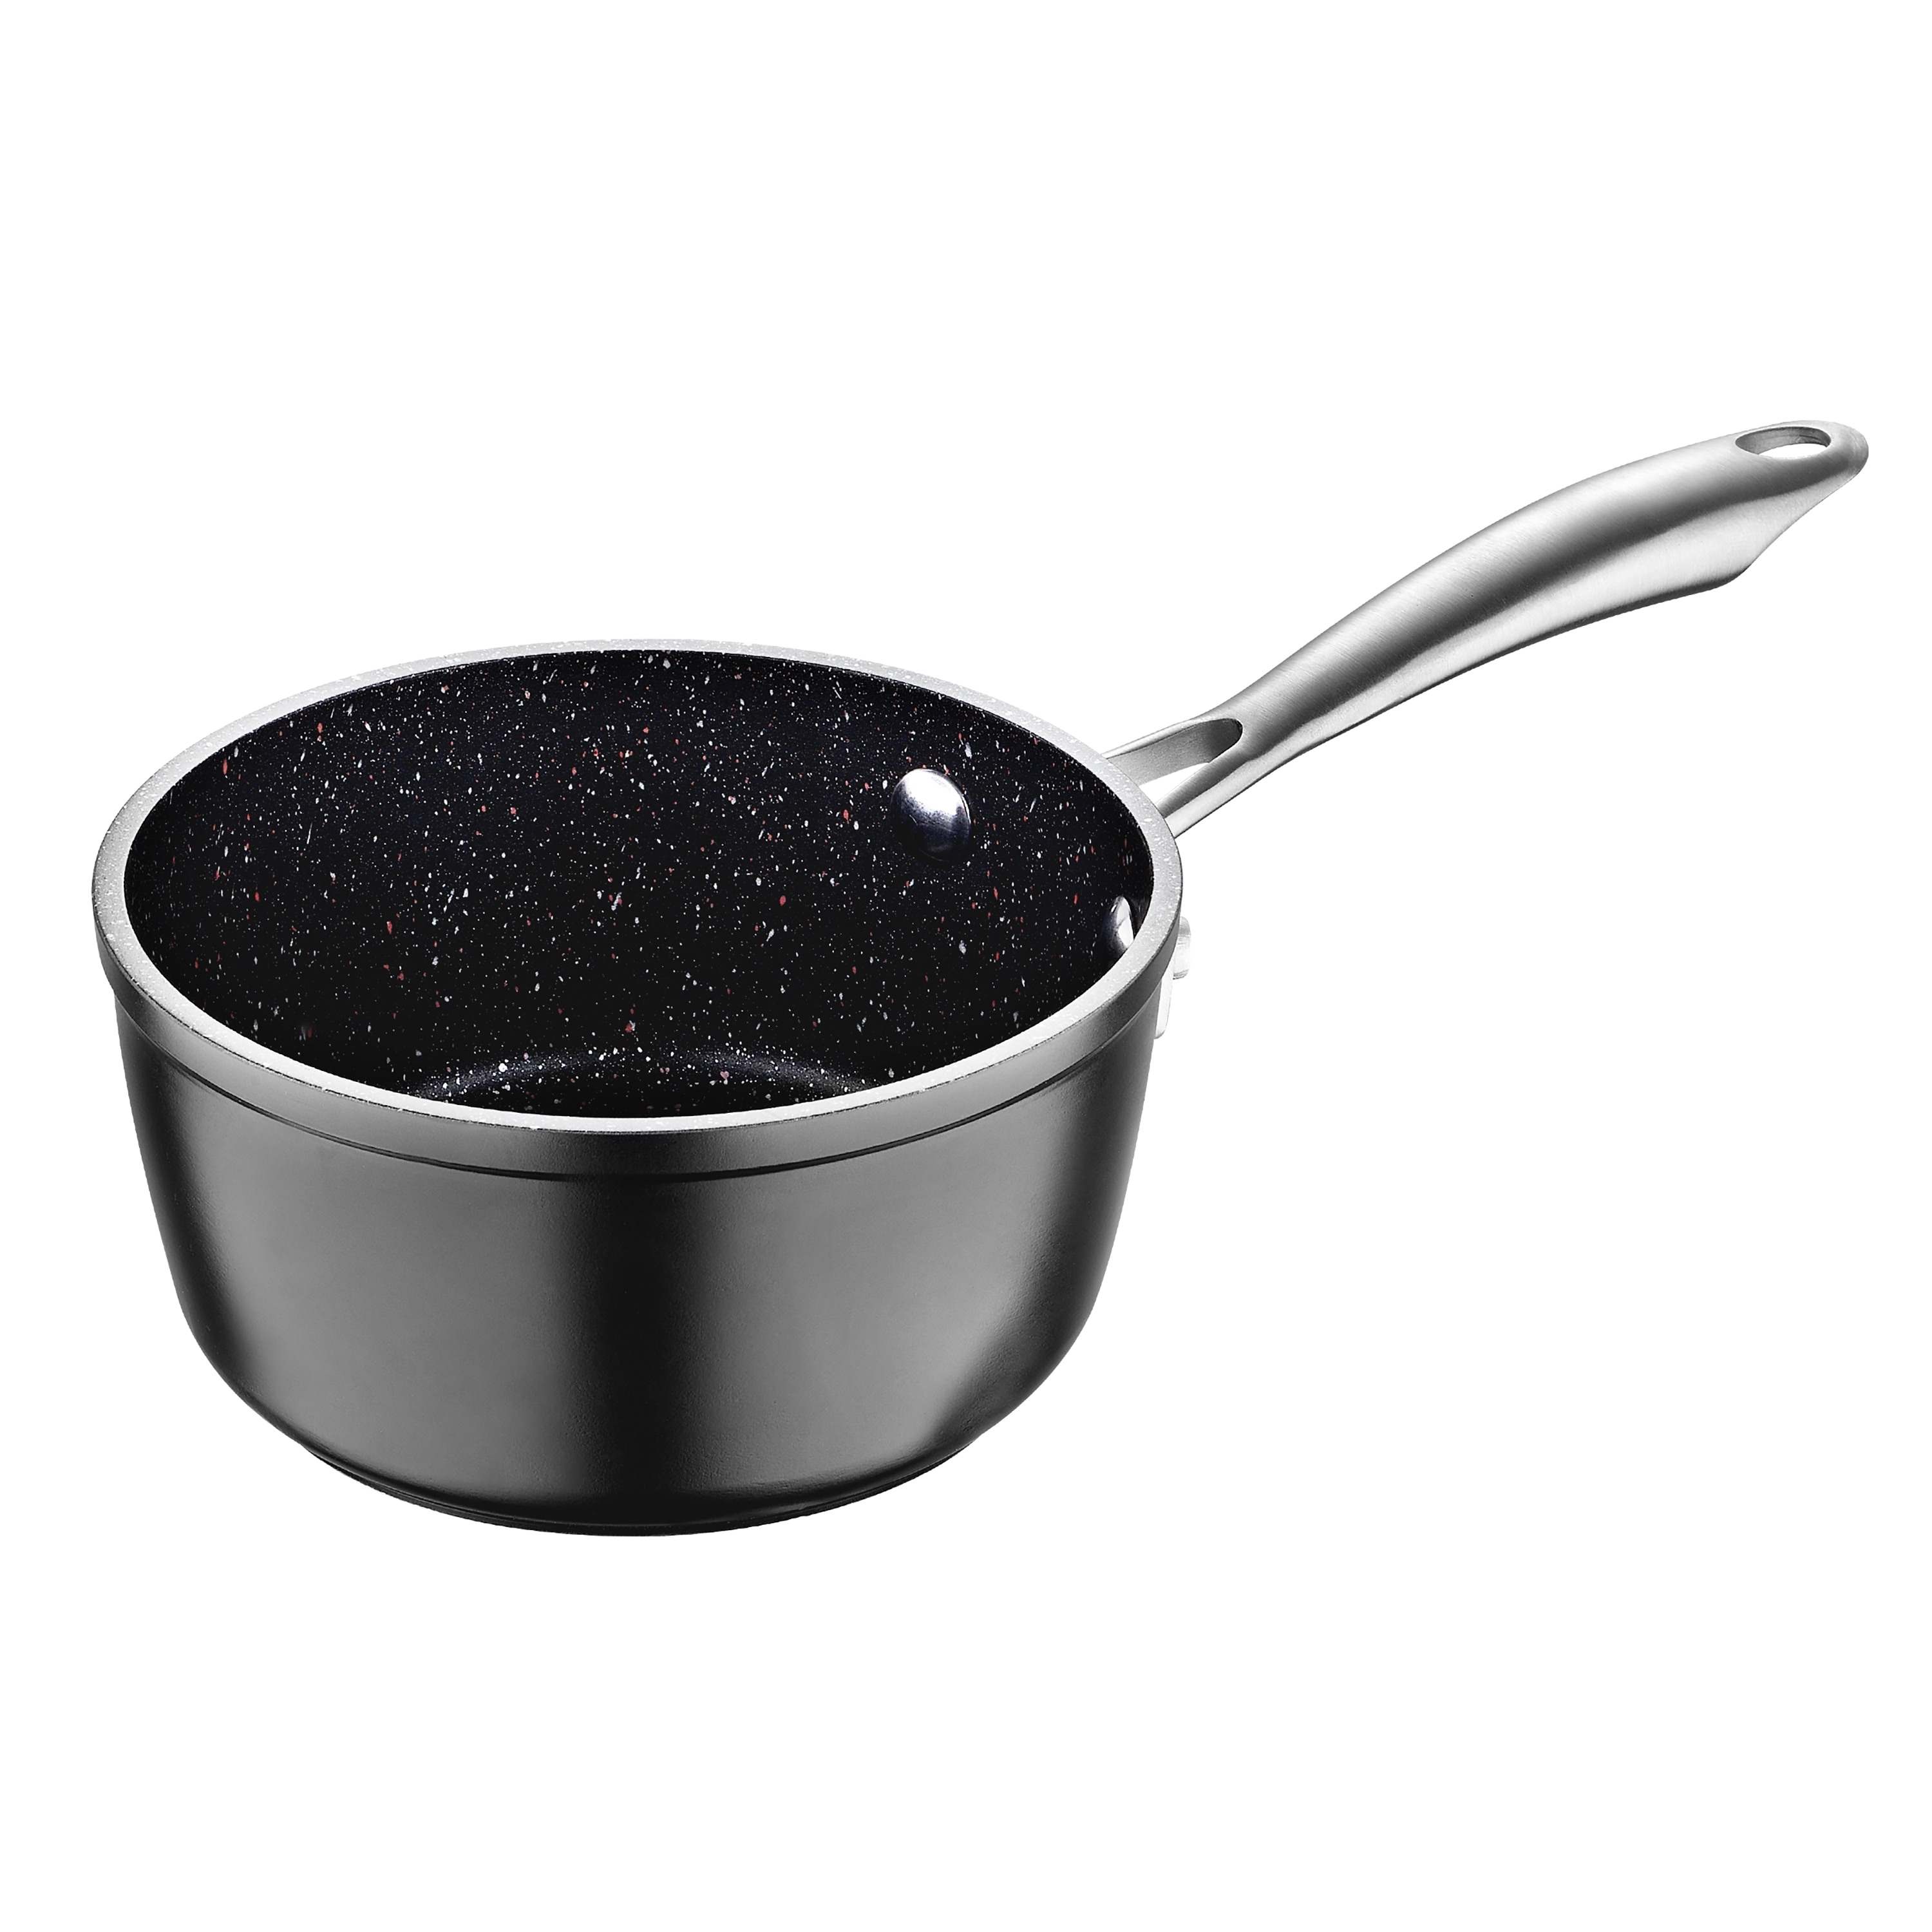 Master Cuisine 4.5 Quart Black Chicken Fryer Pan with Handle